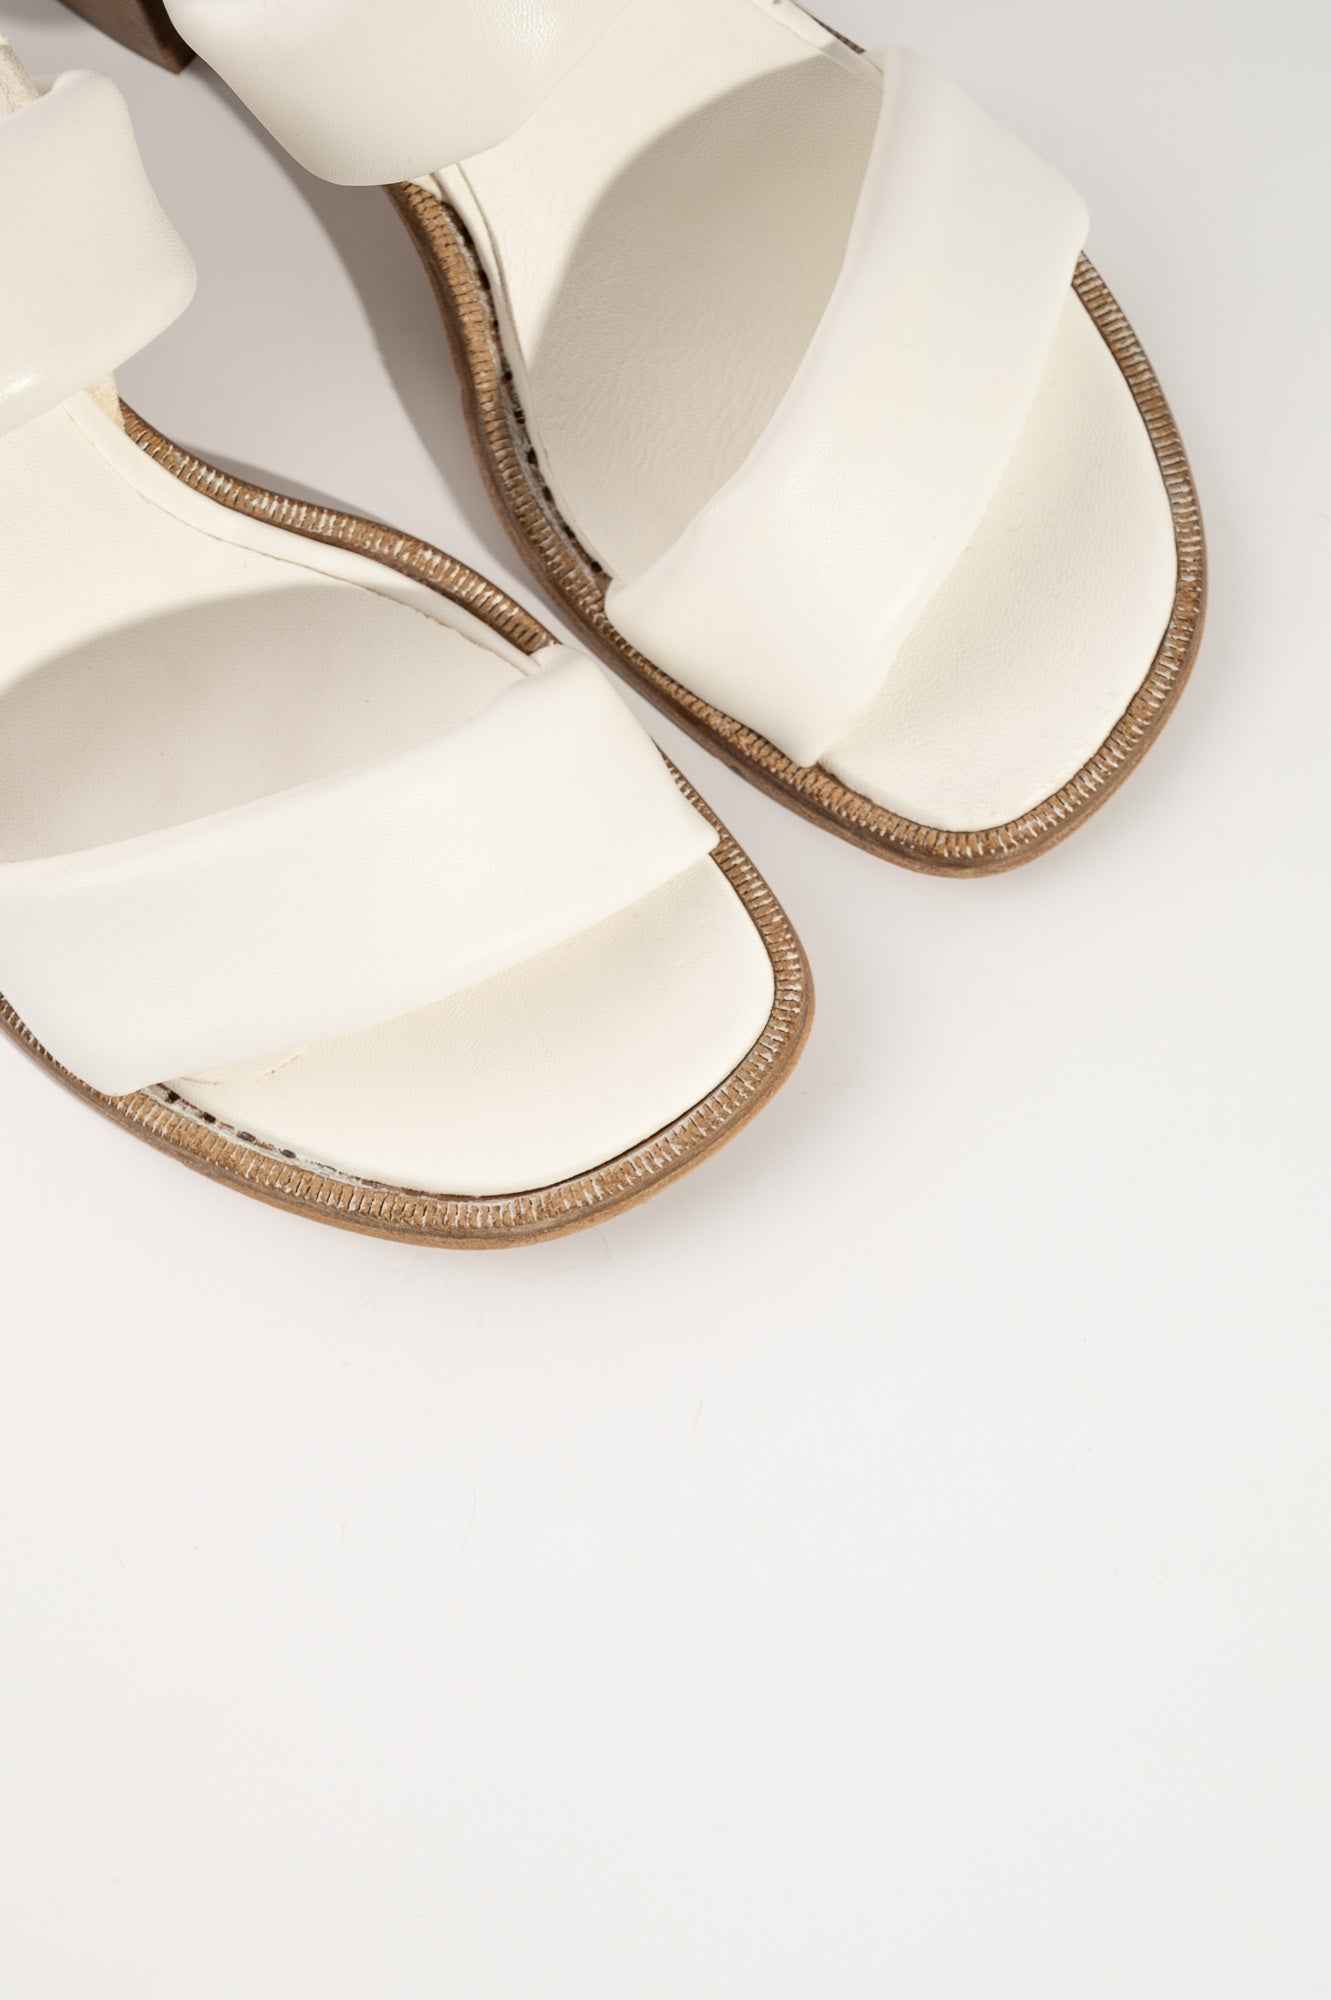 Sandal 124 | White Leather